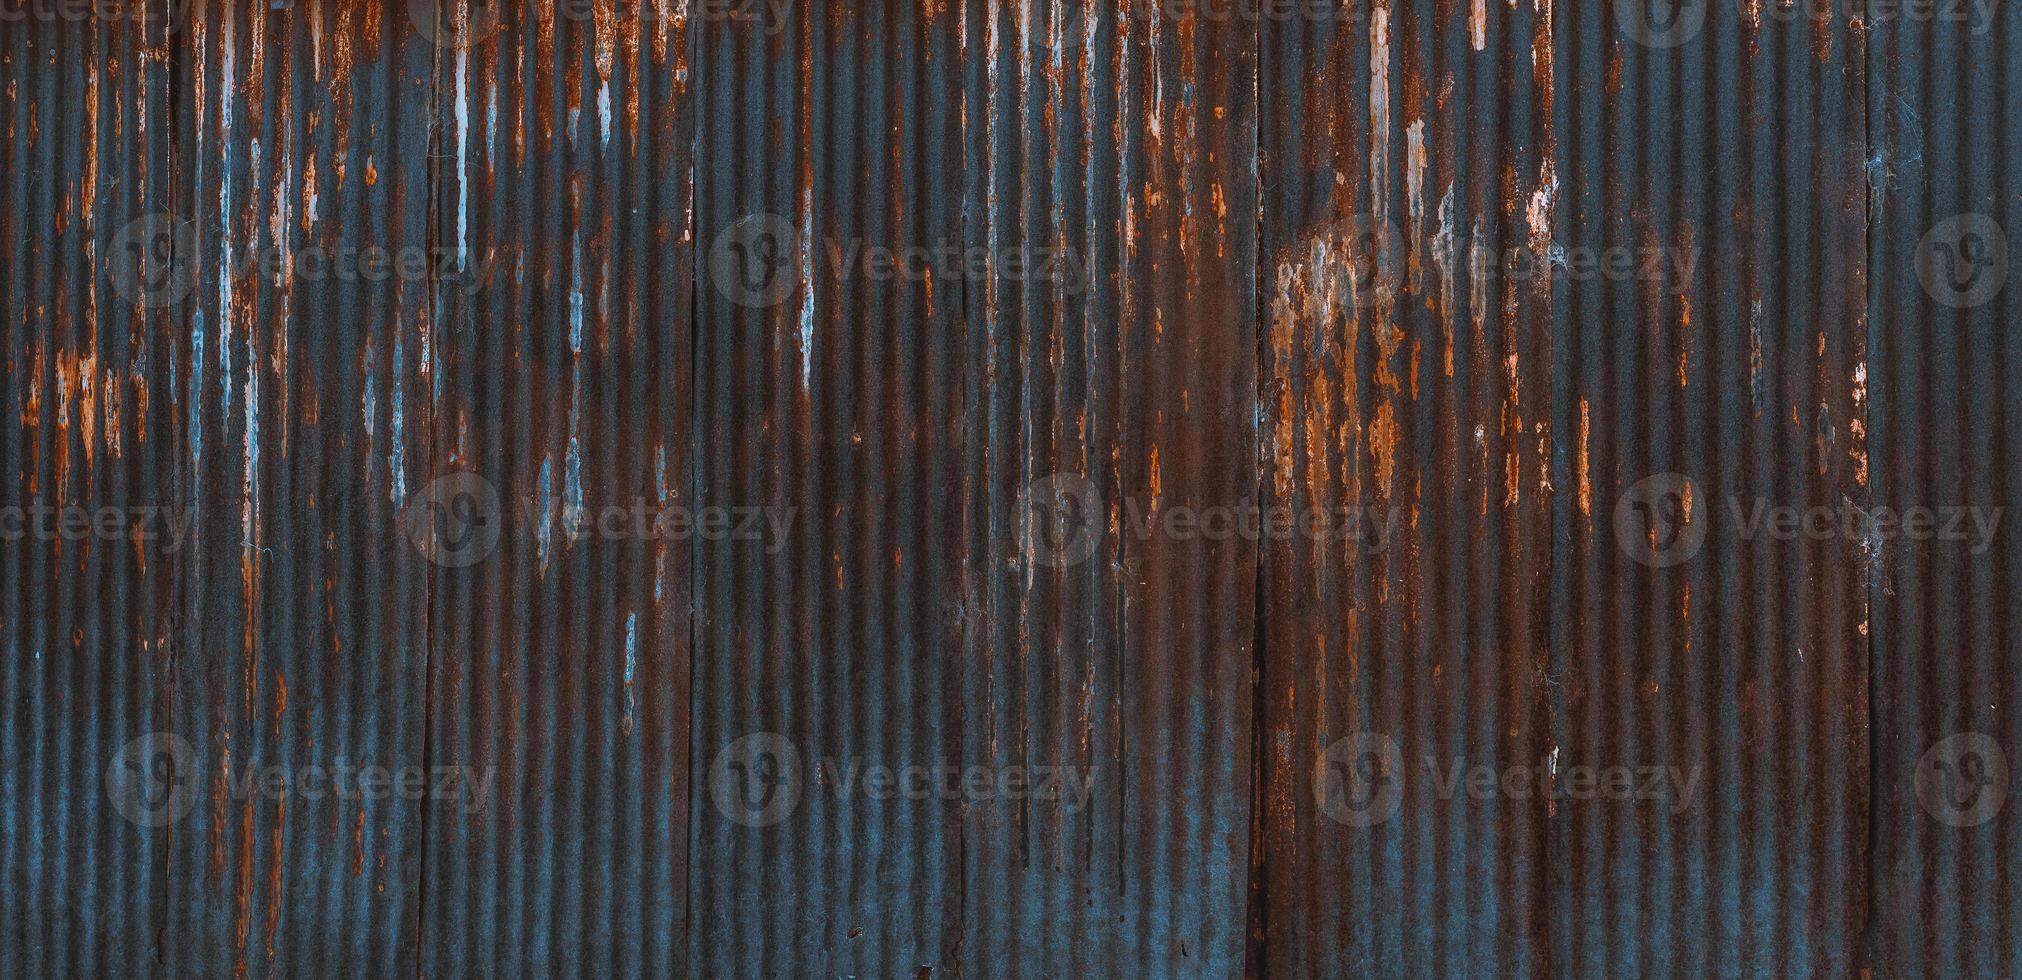 Corrugated Metal Sheet Texture - Wild Textures